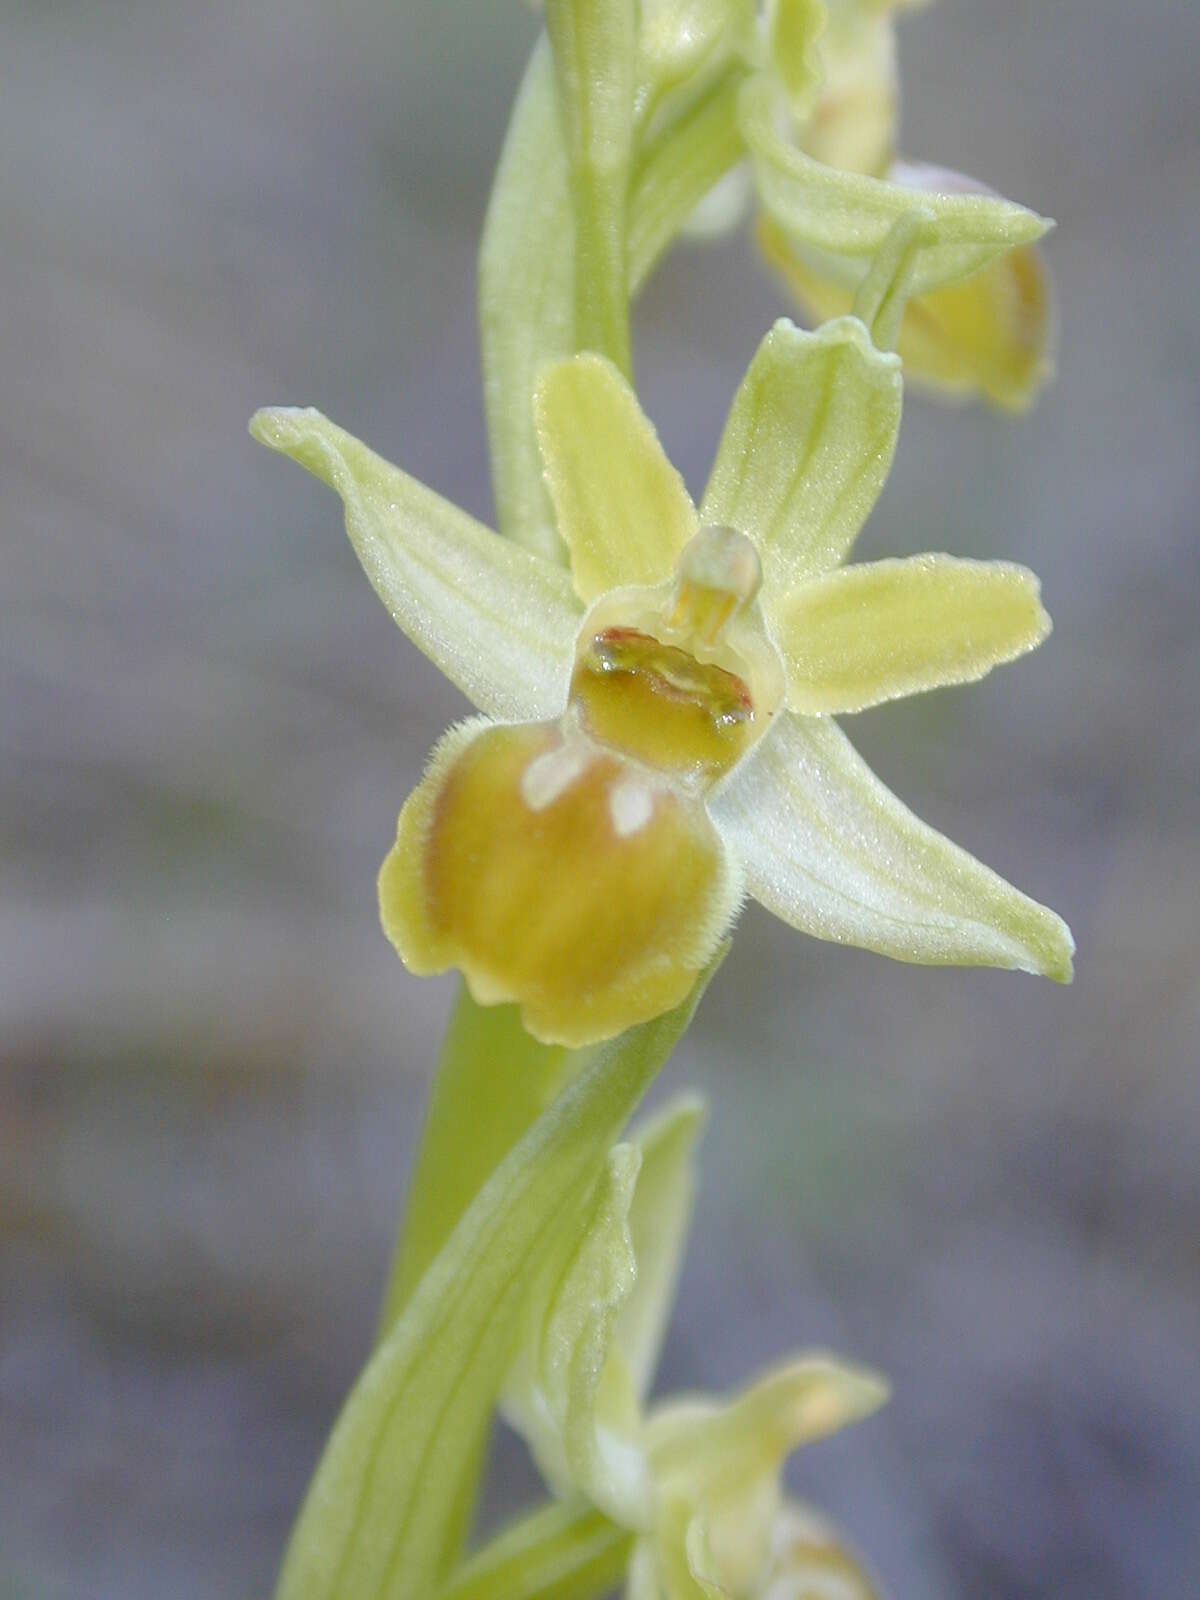 Image of Ophrys sphegodes subsp. araneola (Rchb.) M. Laínz